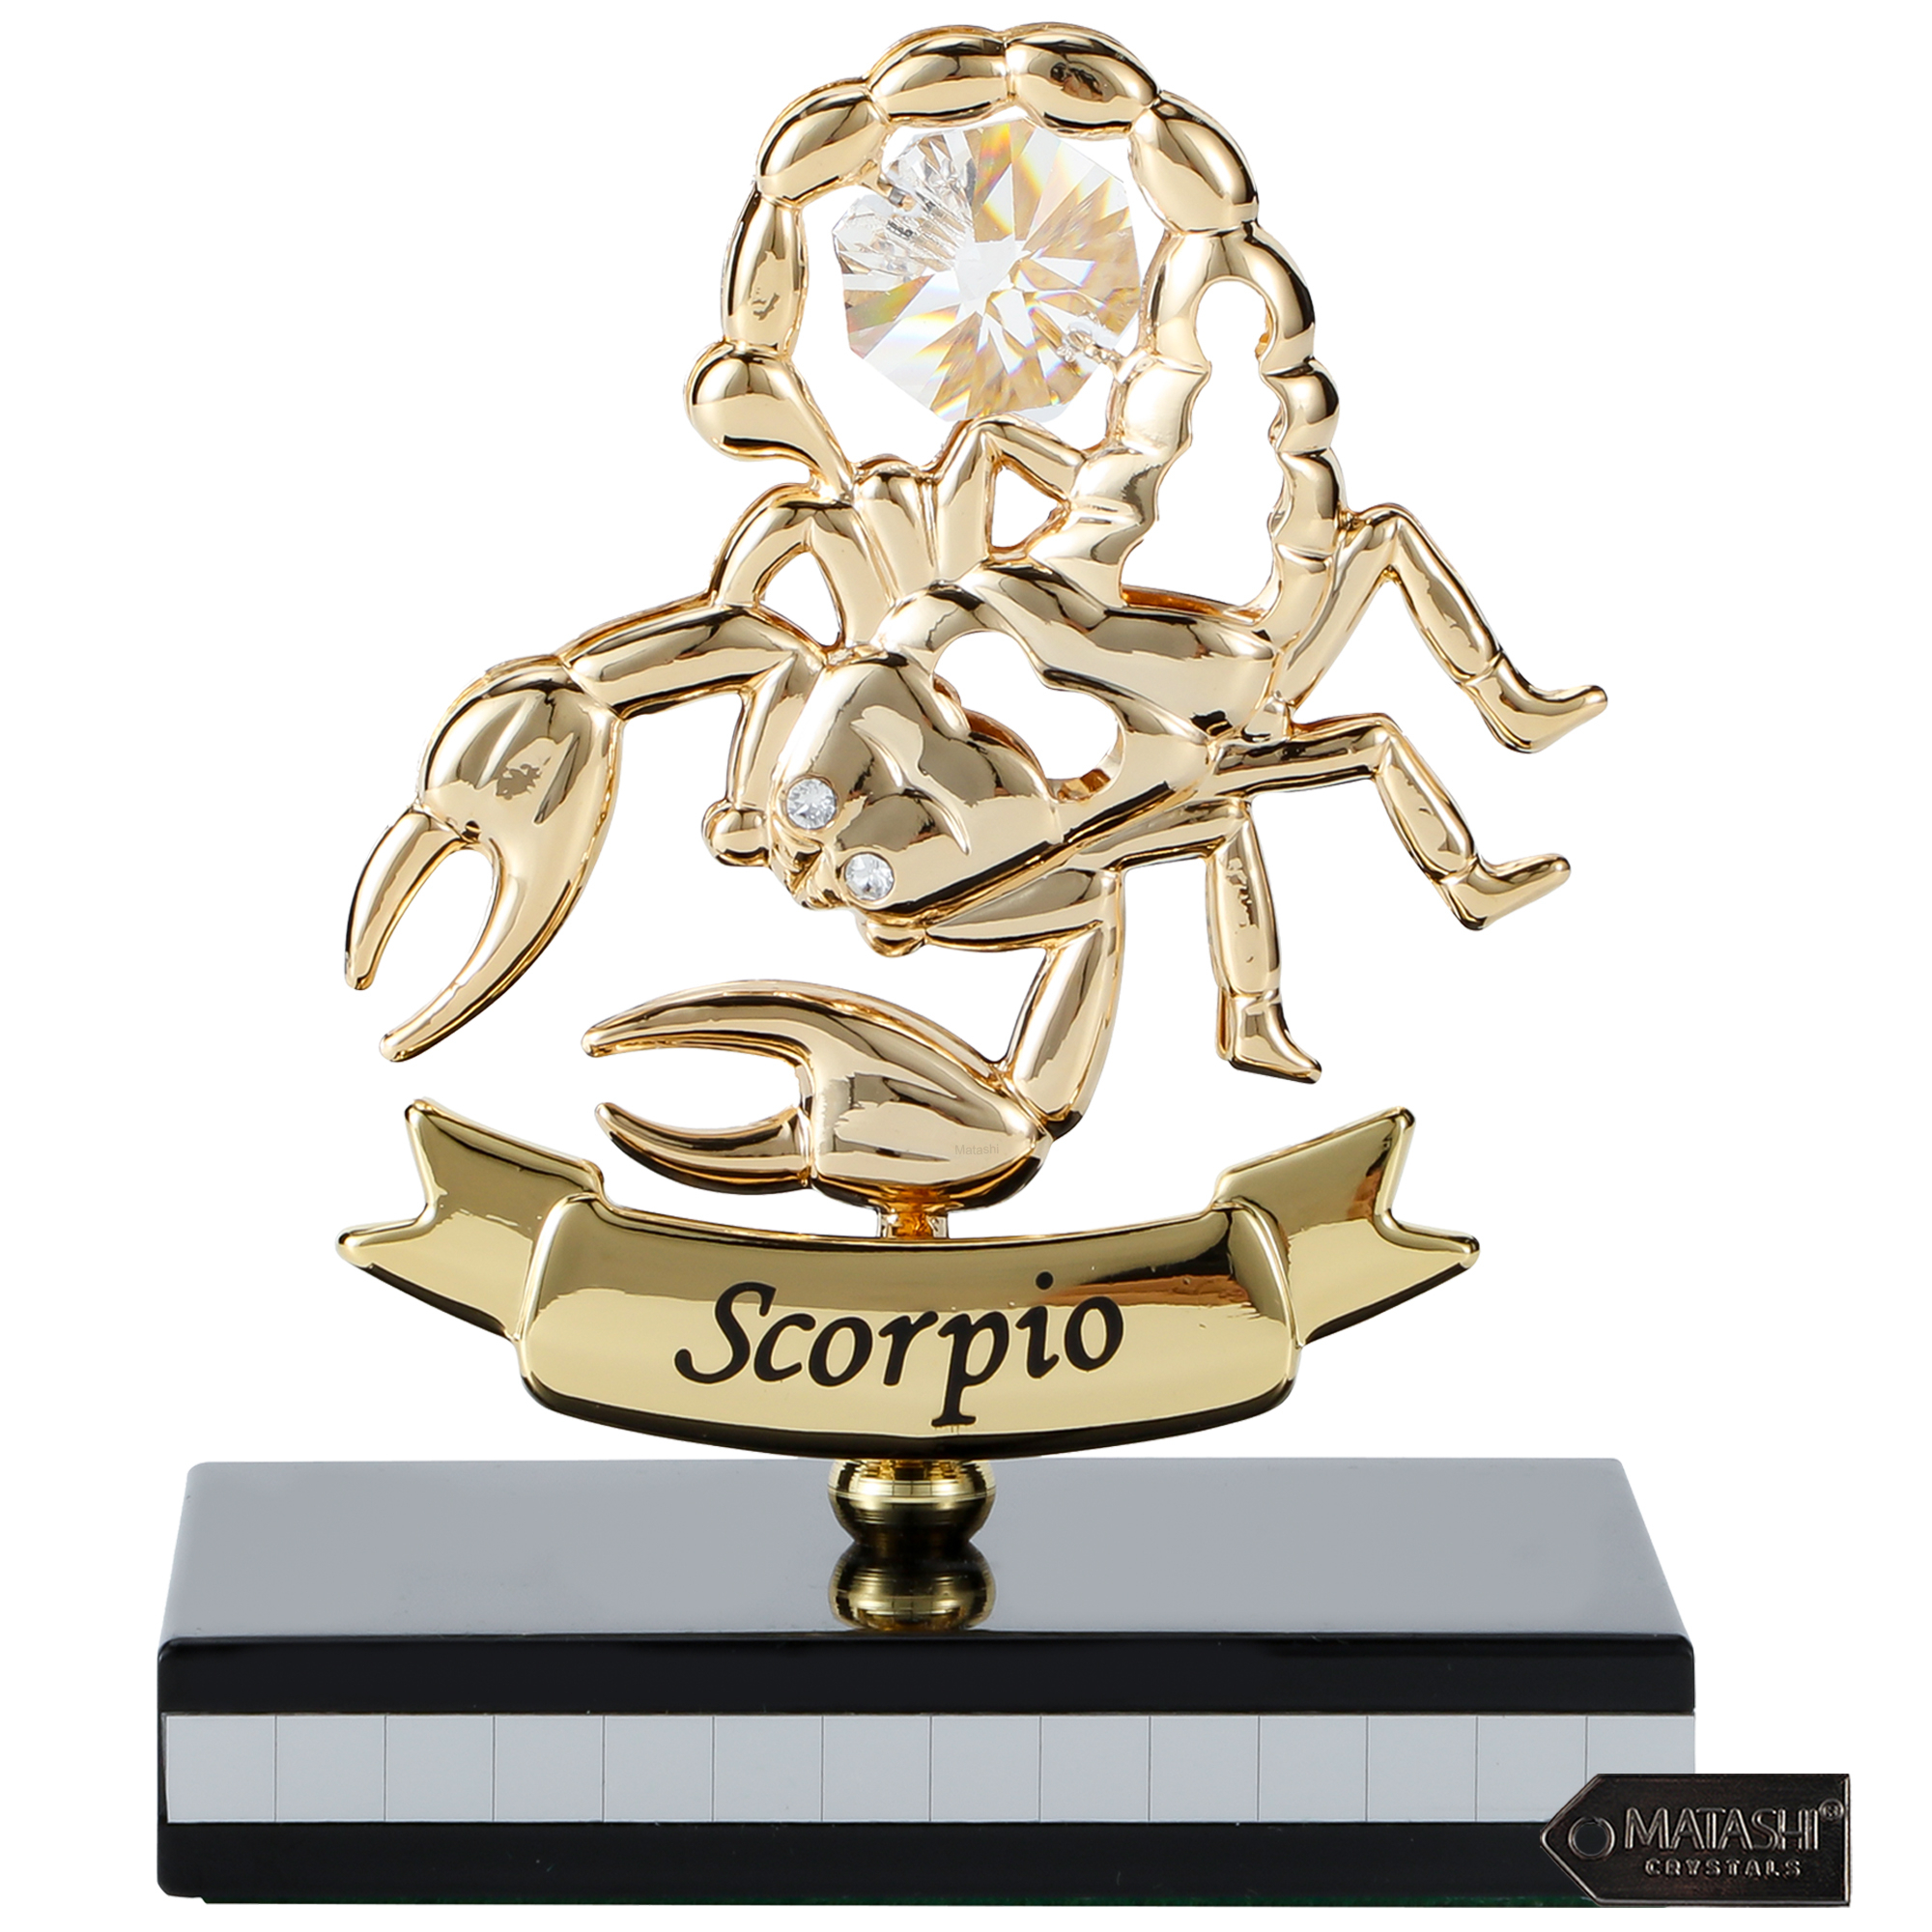 Matashi 24K Gold Plated Zodiac Astrological Sign Scorpio Figurine Statuette On Stand Studded With Matashi Crystals